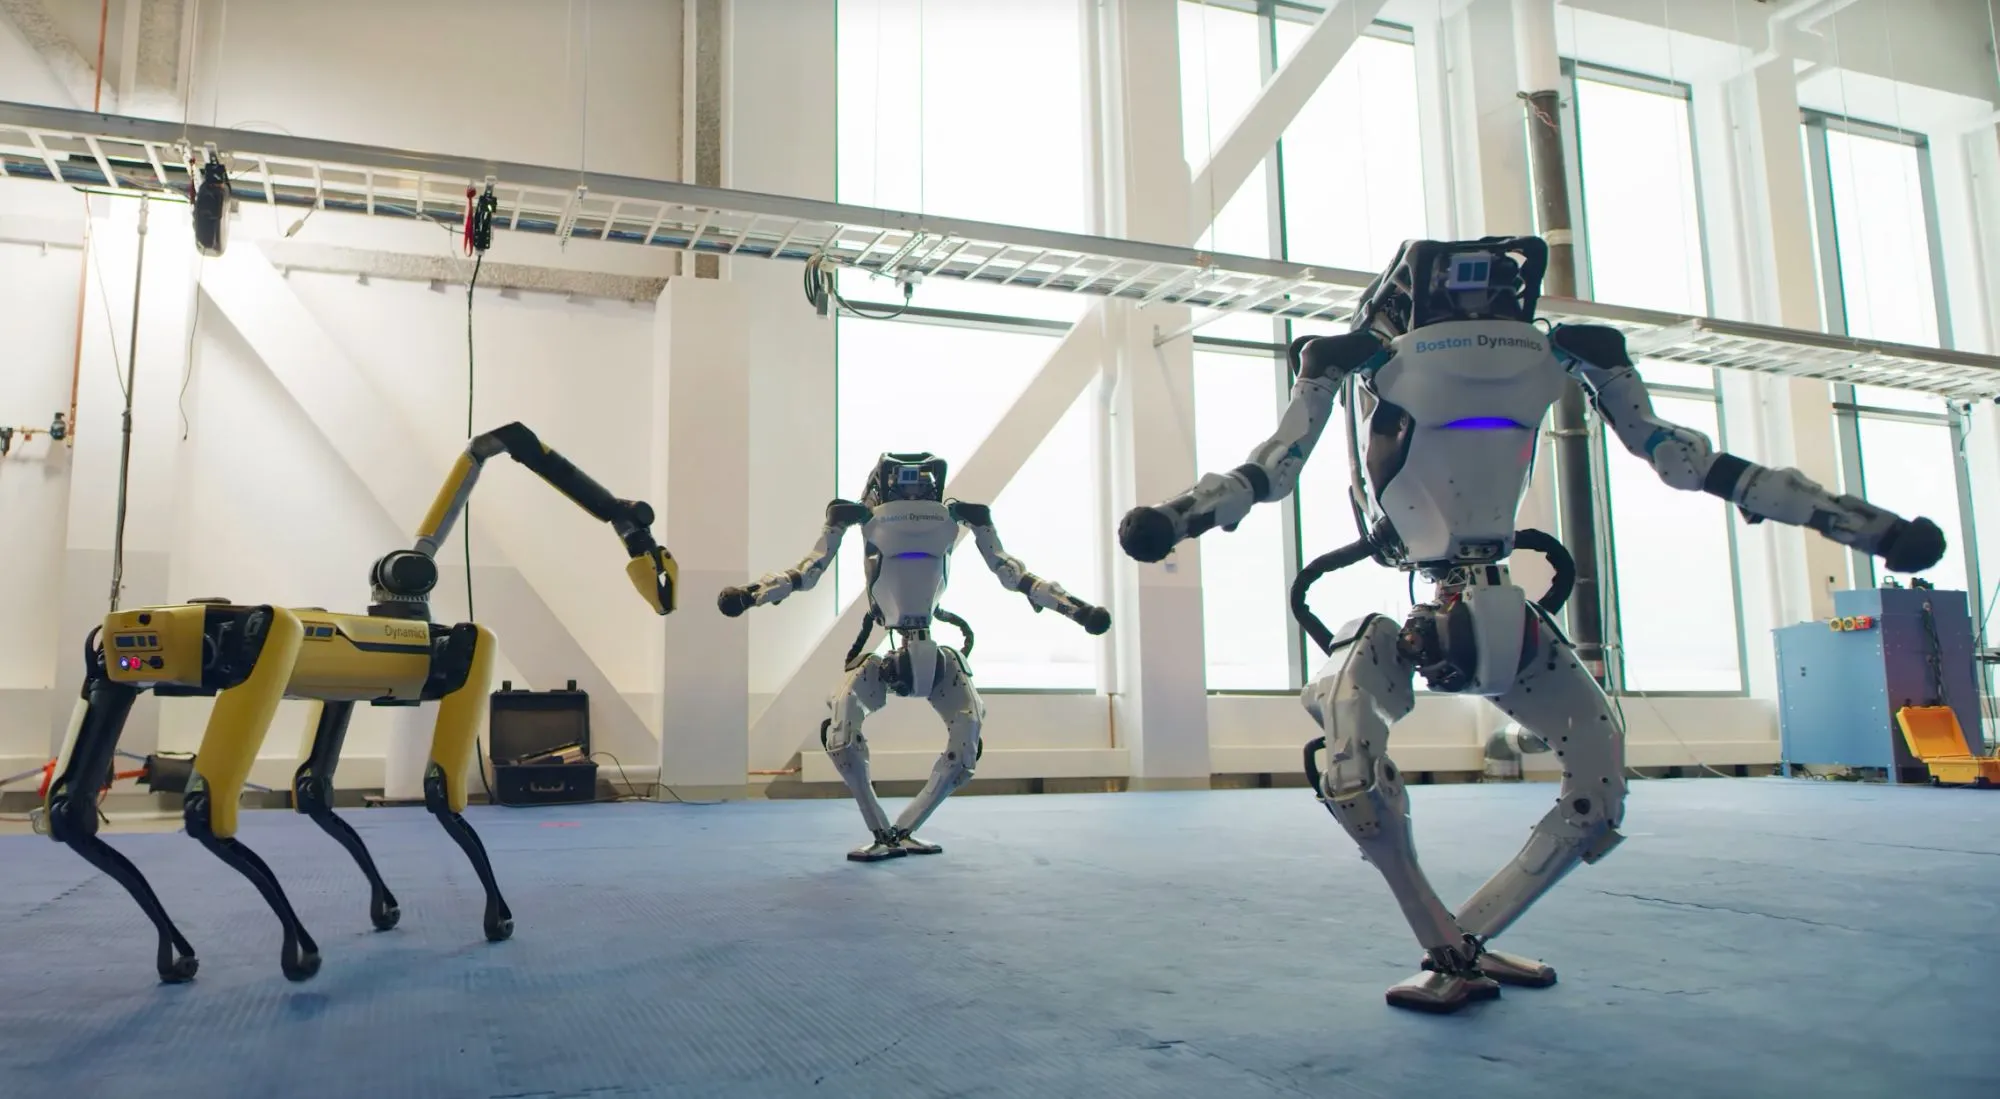 Boston Dynamics robots take over the dance floor